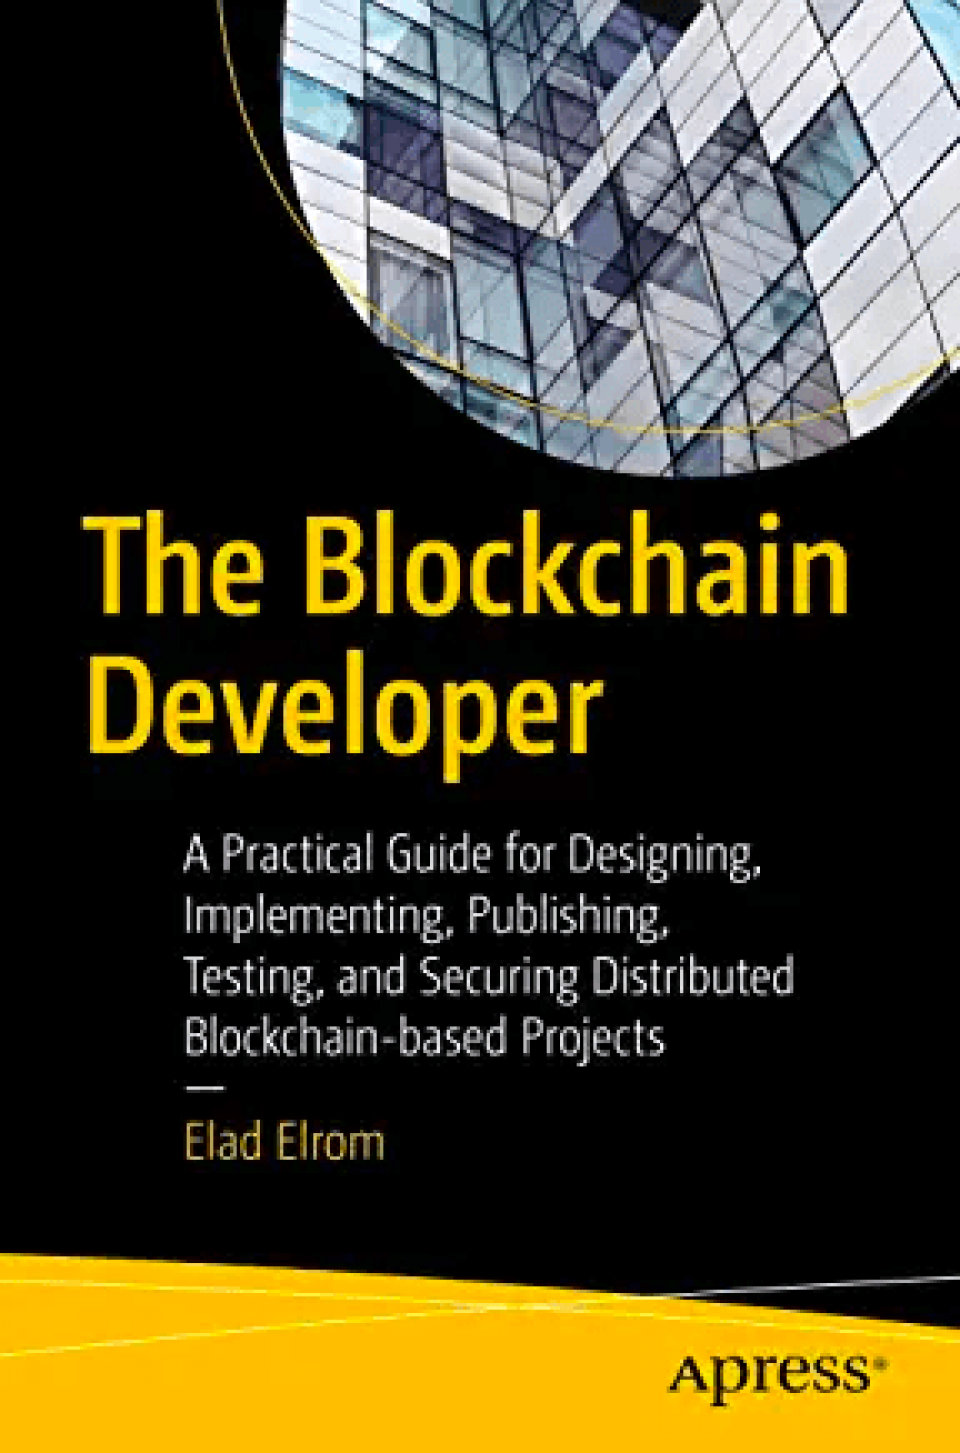 Front cover of The Blockchain Developer.